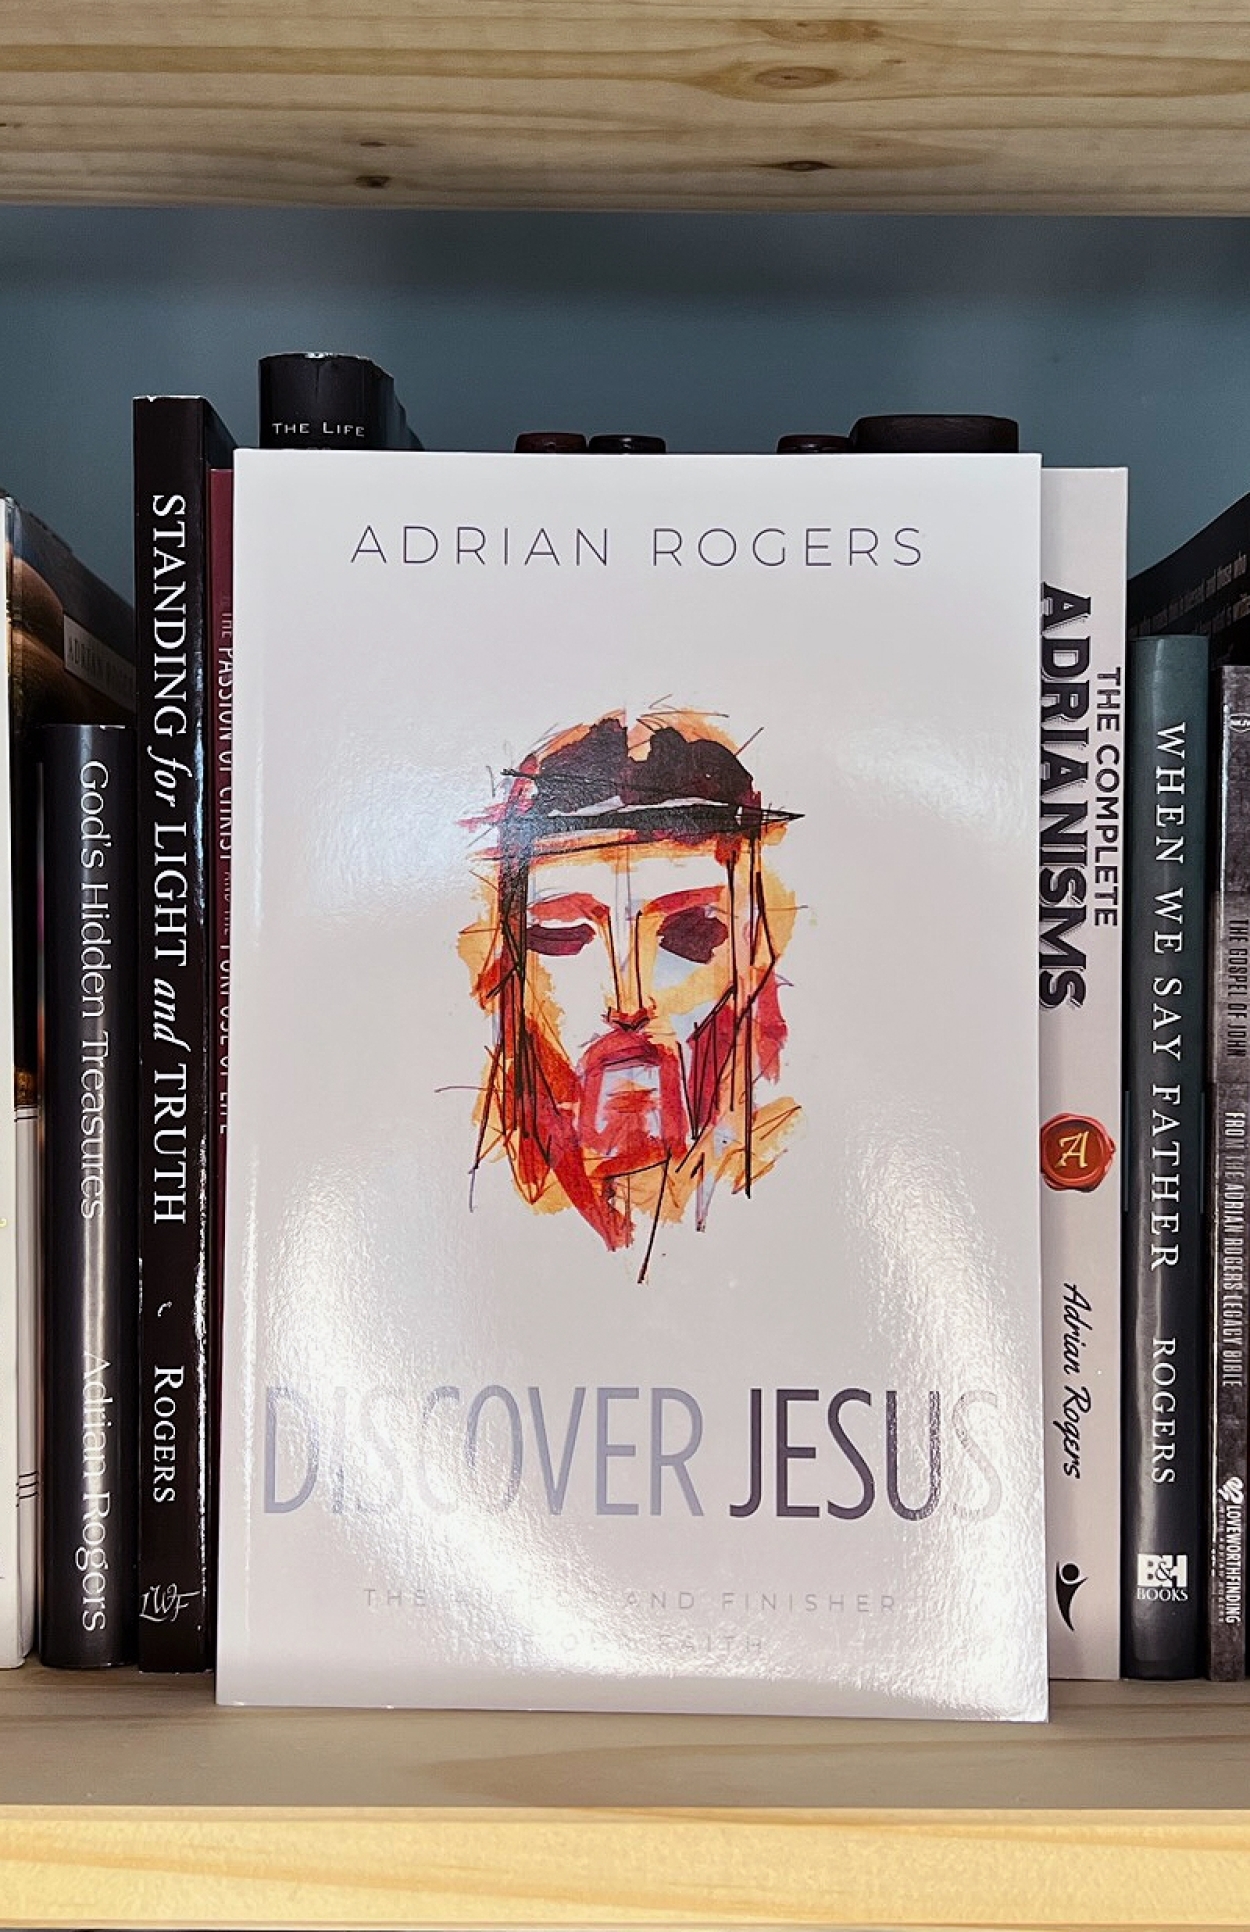 B131 discover jesus book BOOKSHELF